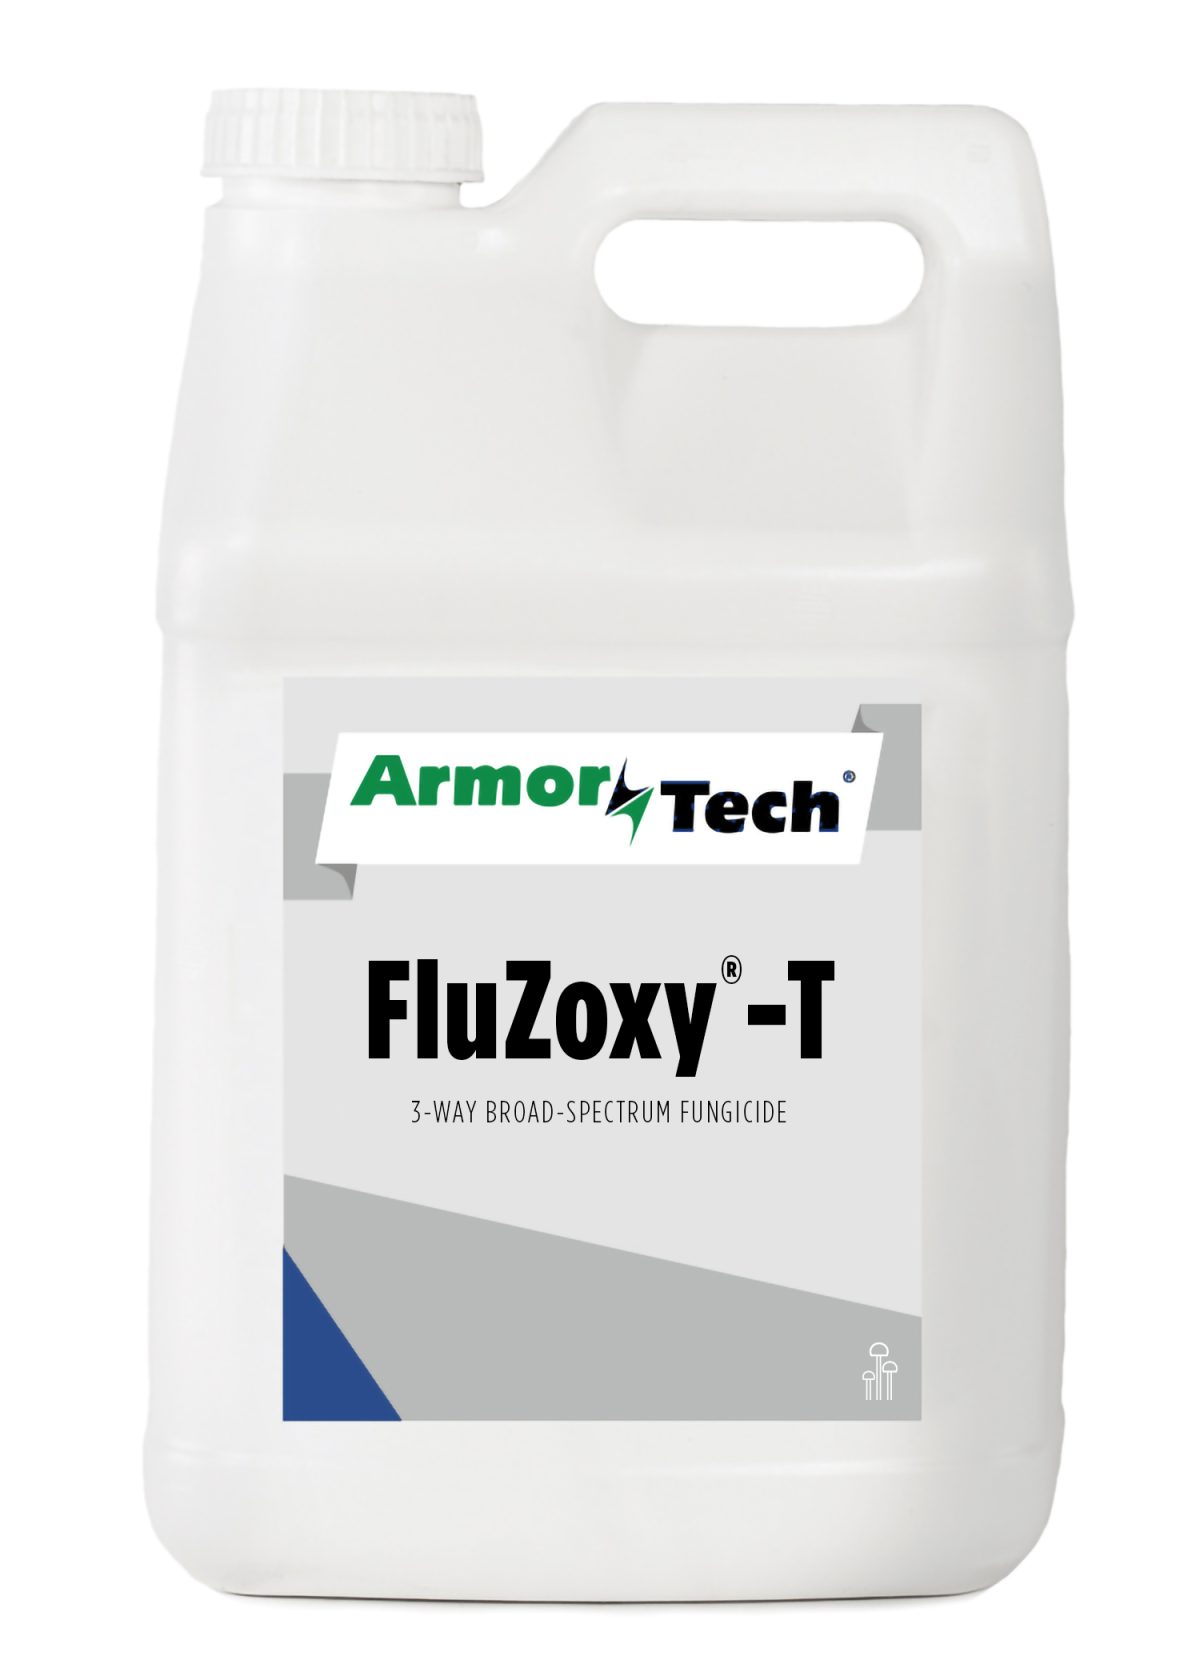 ArmorTech FluZoxy-T